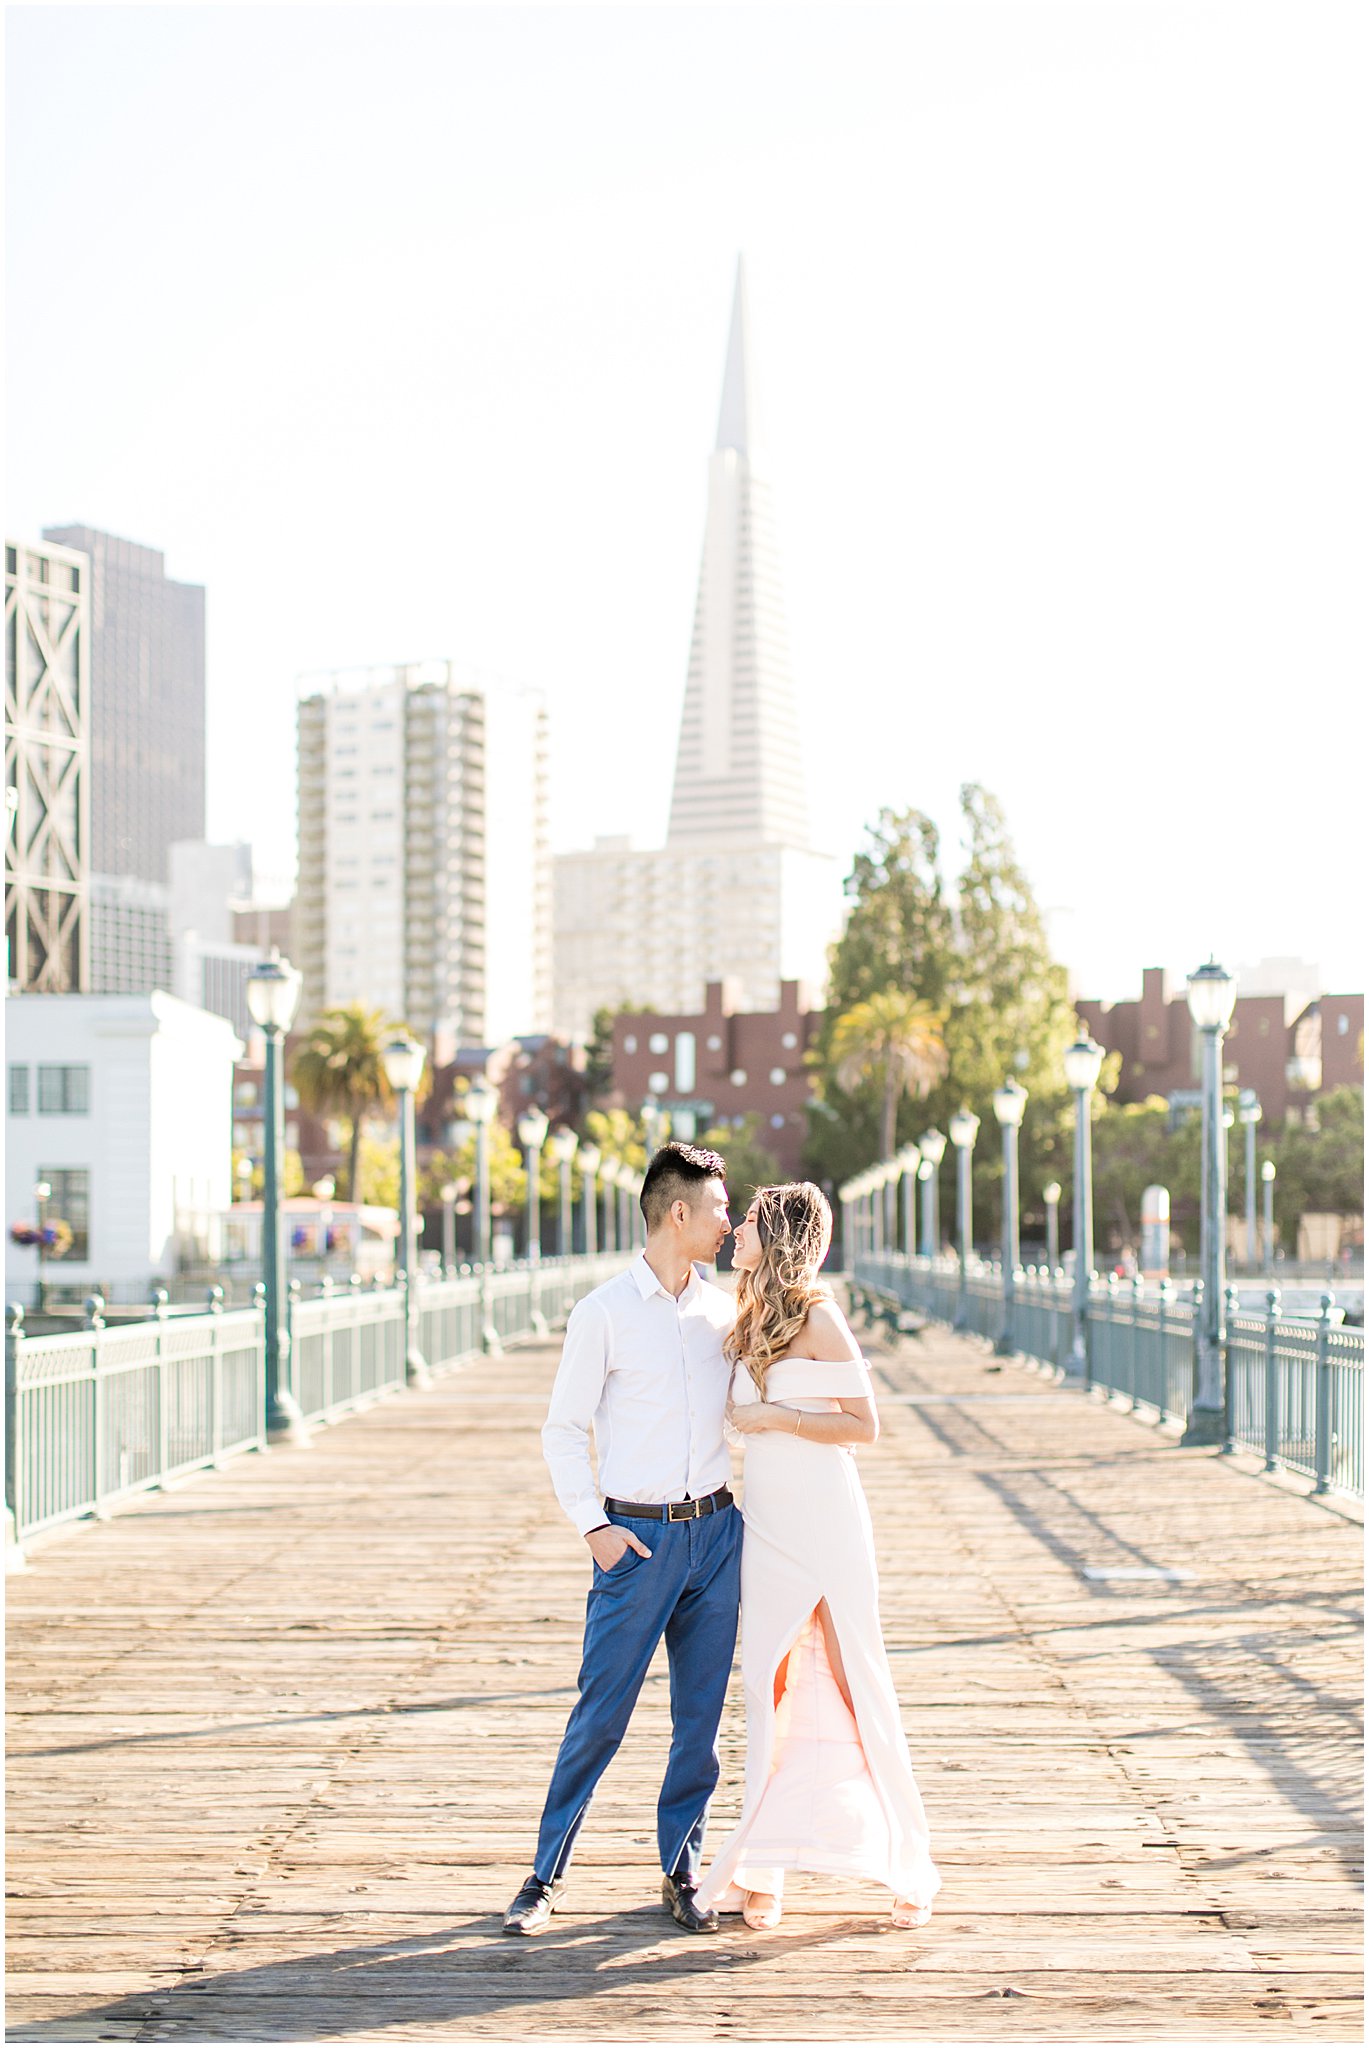 San Francisco Engagement Photos - Bay Area Wedding Photographer - Angela Sue Photography_0001.jpg